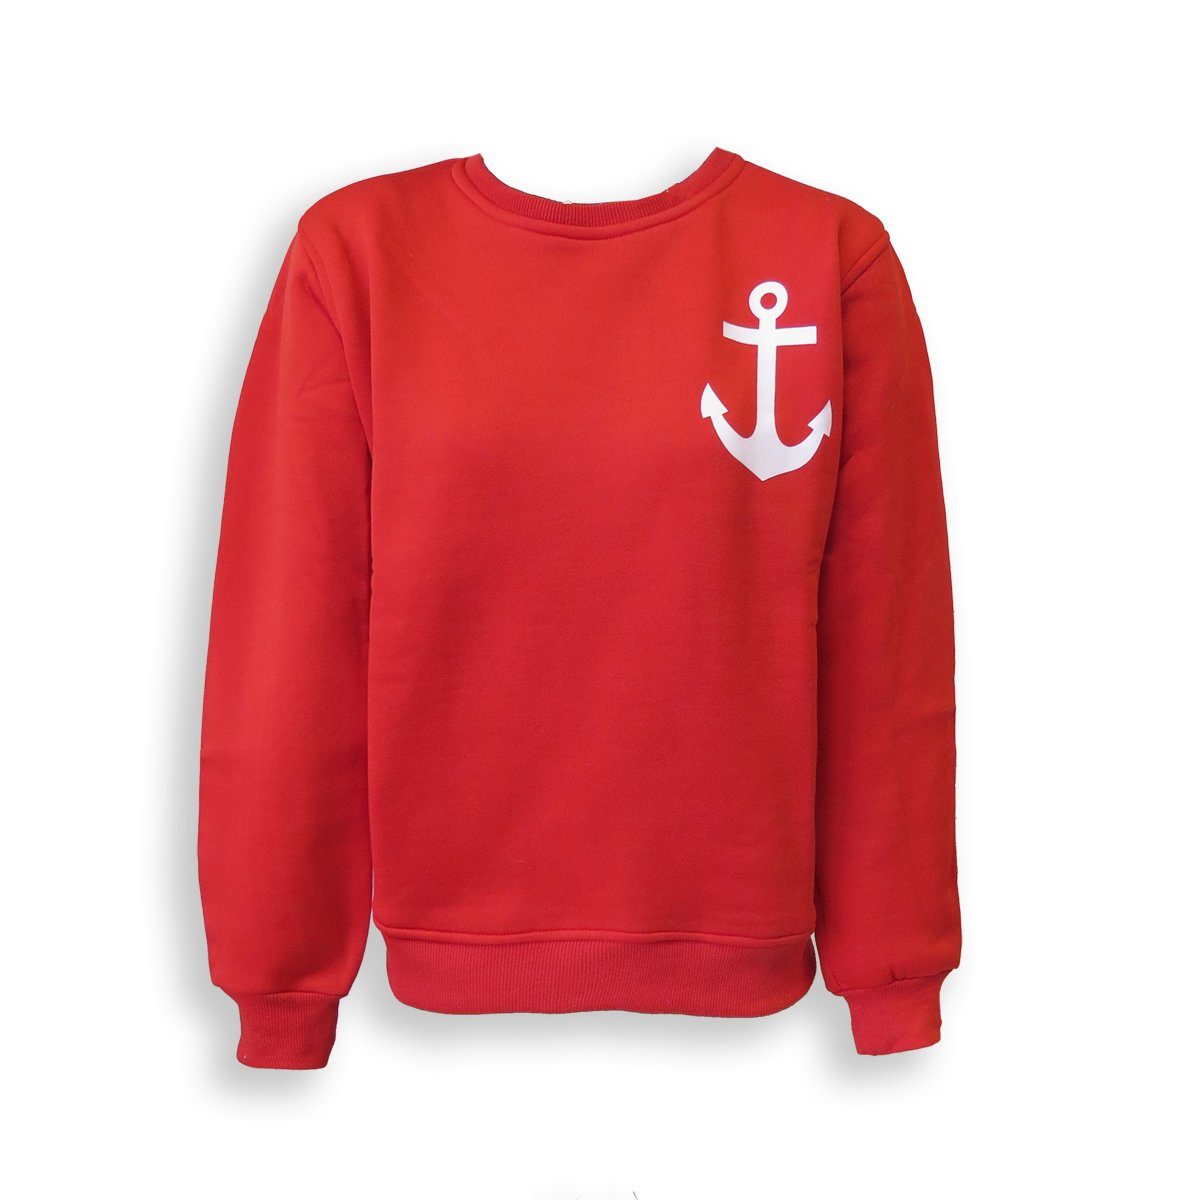 Sonia Originelli T-Shirt Sweatshirt "Meerweh" Anker Maritim Druck Damen Unifarben Pullover rot